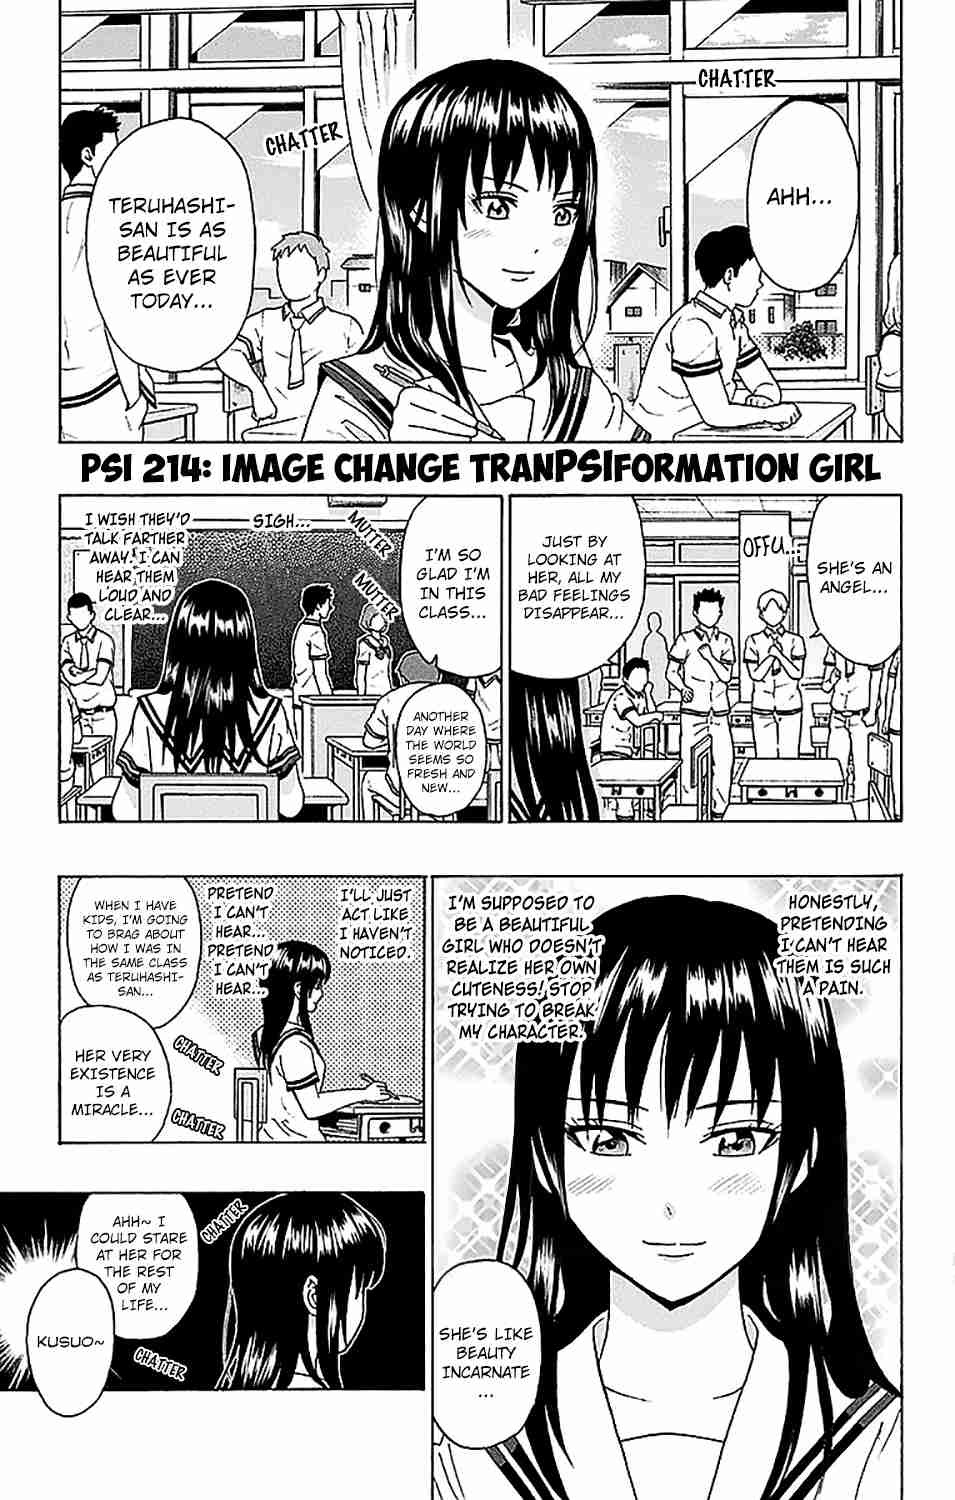 Saiki Kusuo no PSI nan Vol. 20 Ch. 214 Image Change TranPSIformation Girl